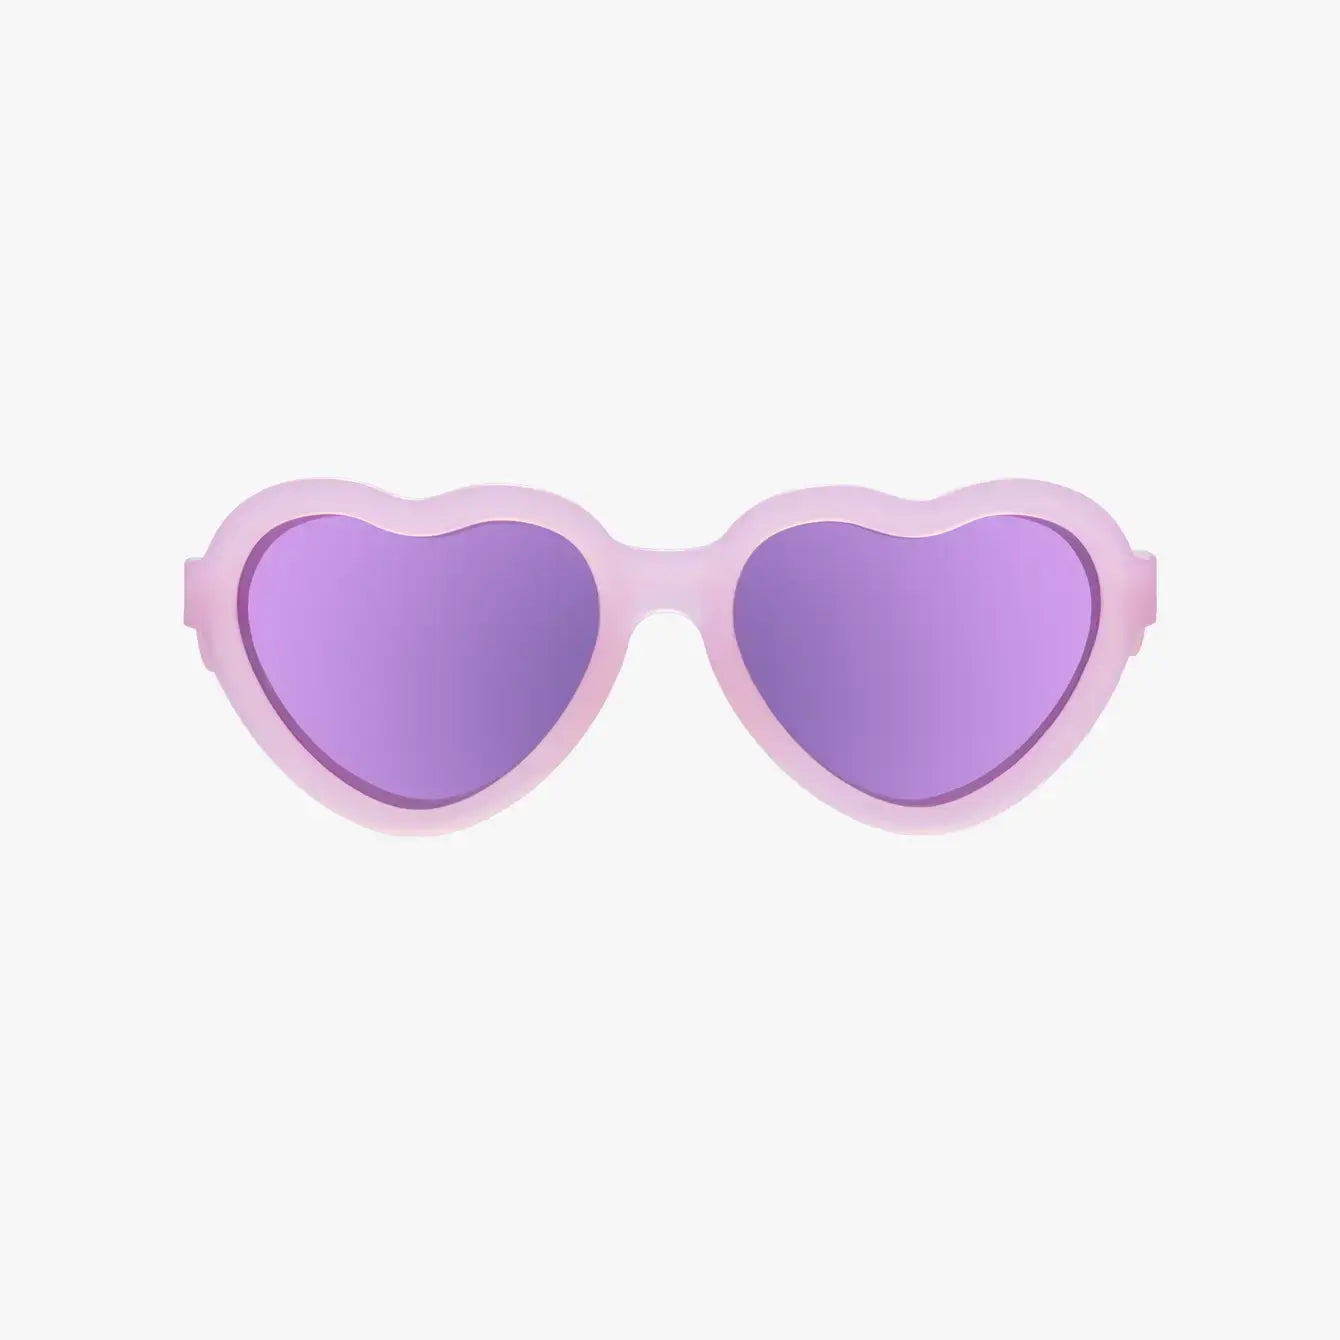 Babiators - Polarized Heart Sunglasses: Ages 3-5 / Sweetheart Heart